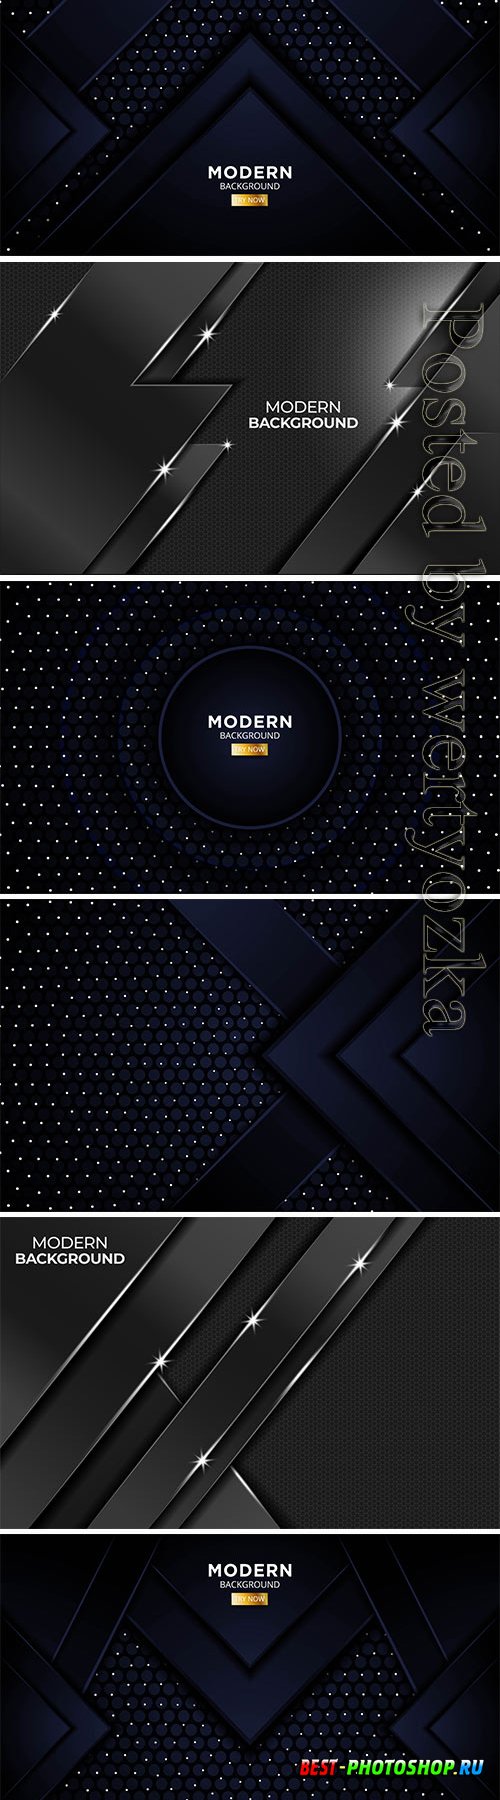 Modern abstract dark background geometric template